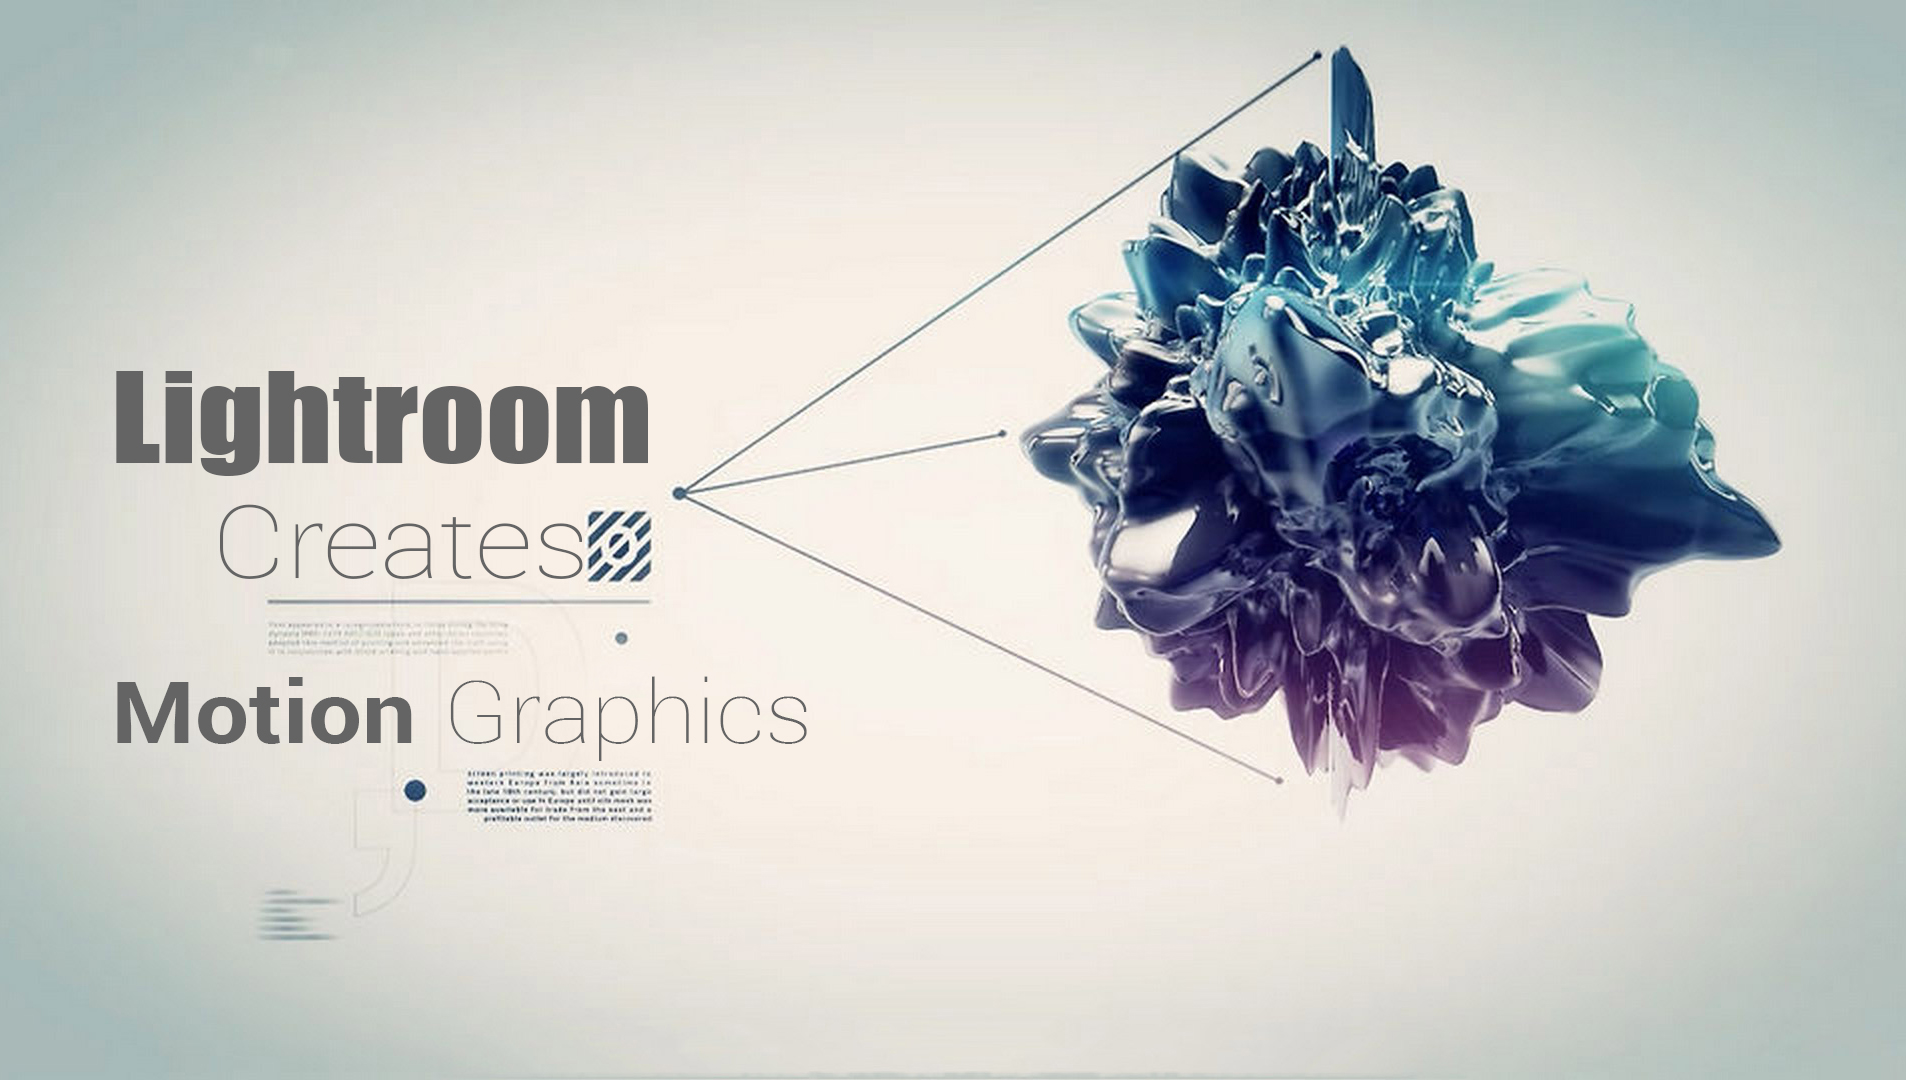 Lightroombd Creates Motion Graphics